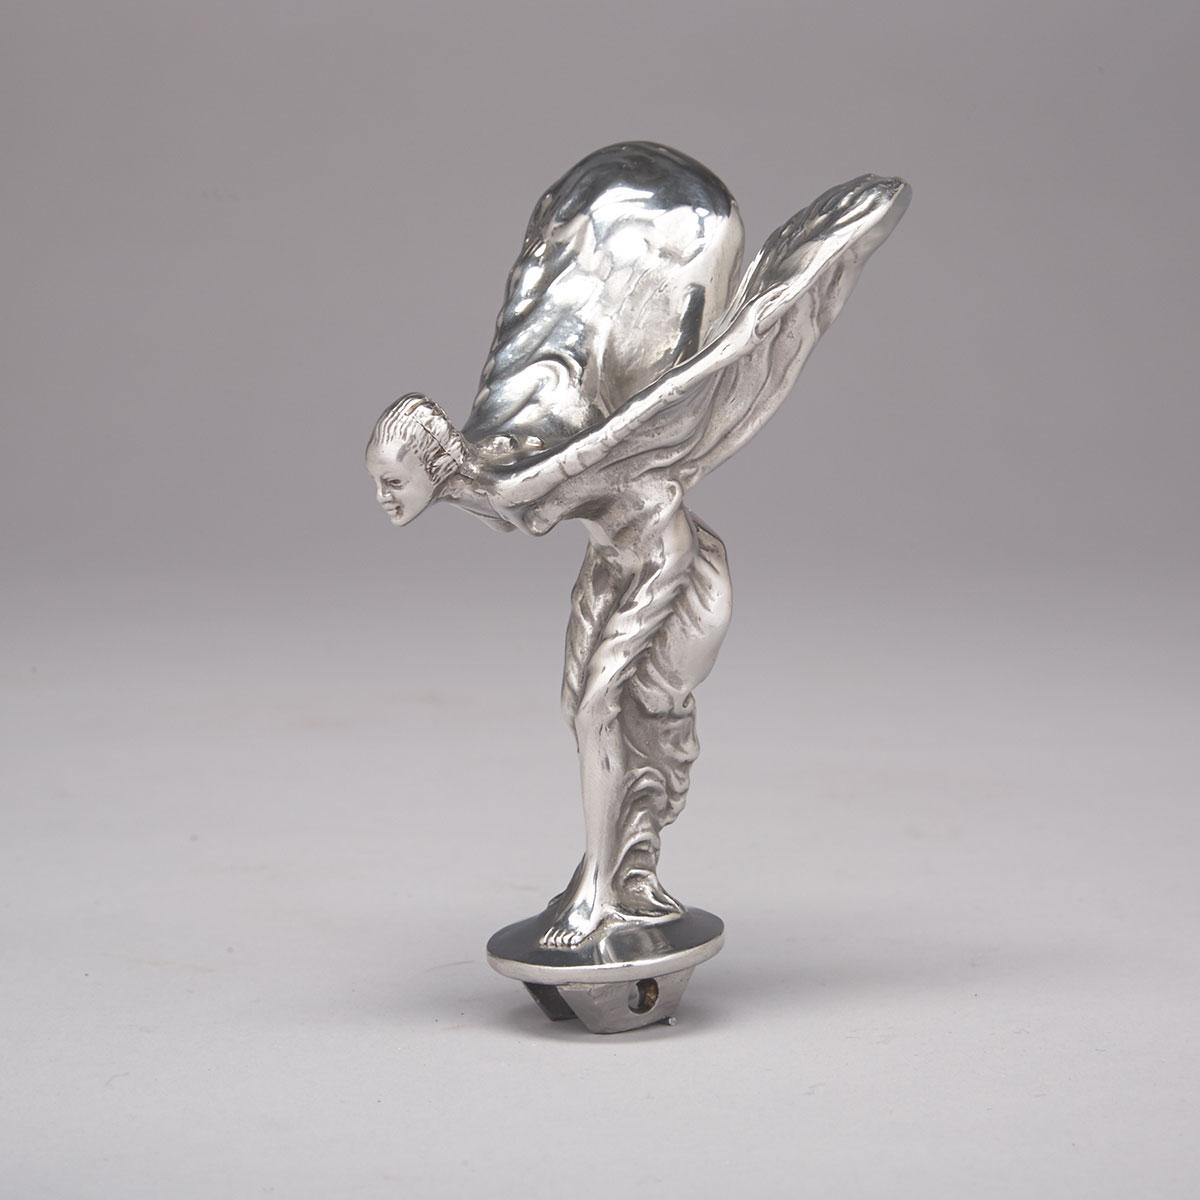 Chromium Plated Metal ‘Spirit of Ecstasy’ Rolls Royce Mascot Hood Ornament, mid 20th century